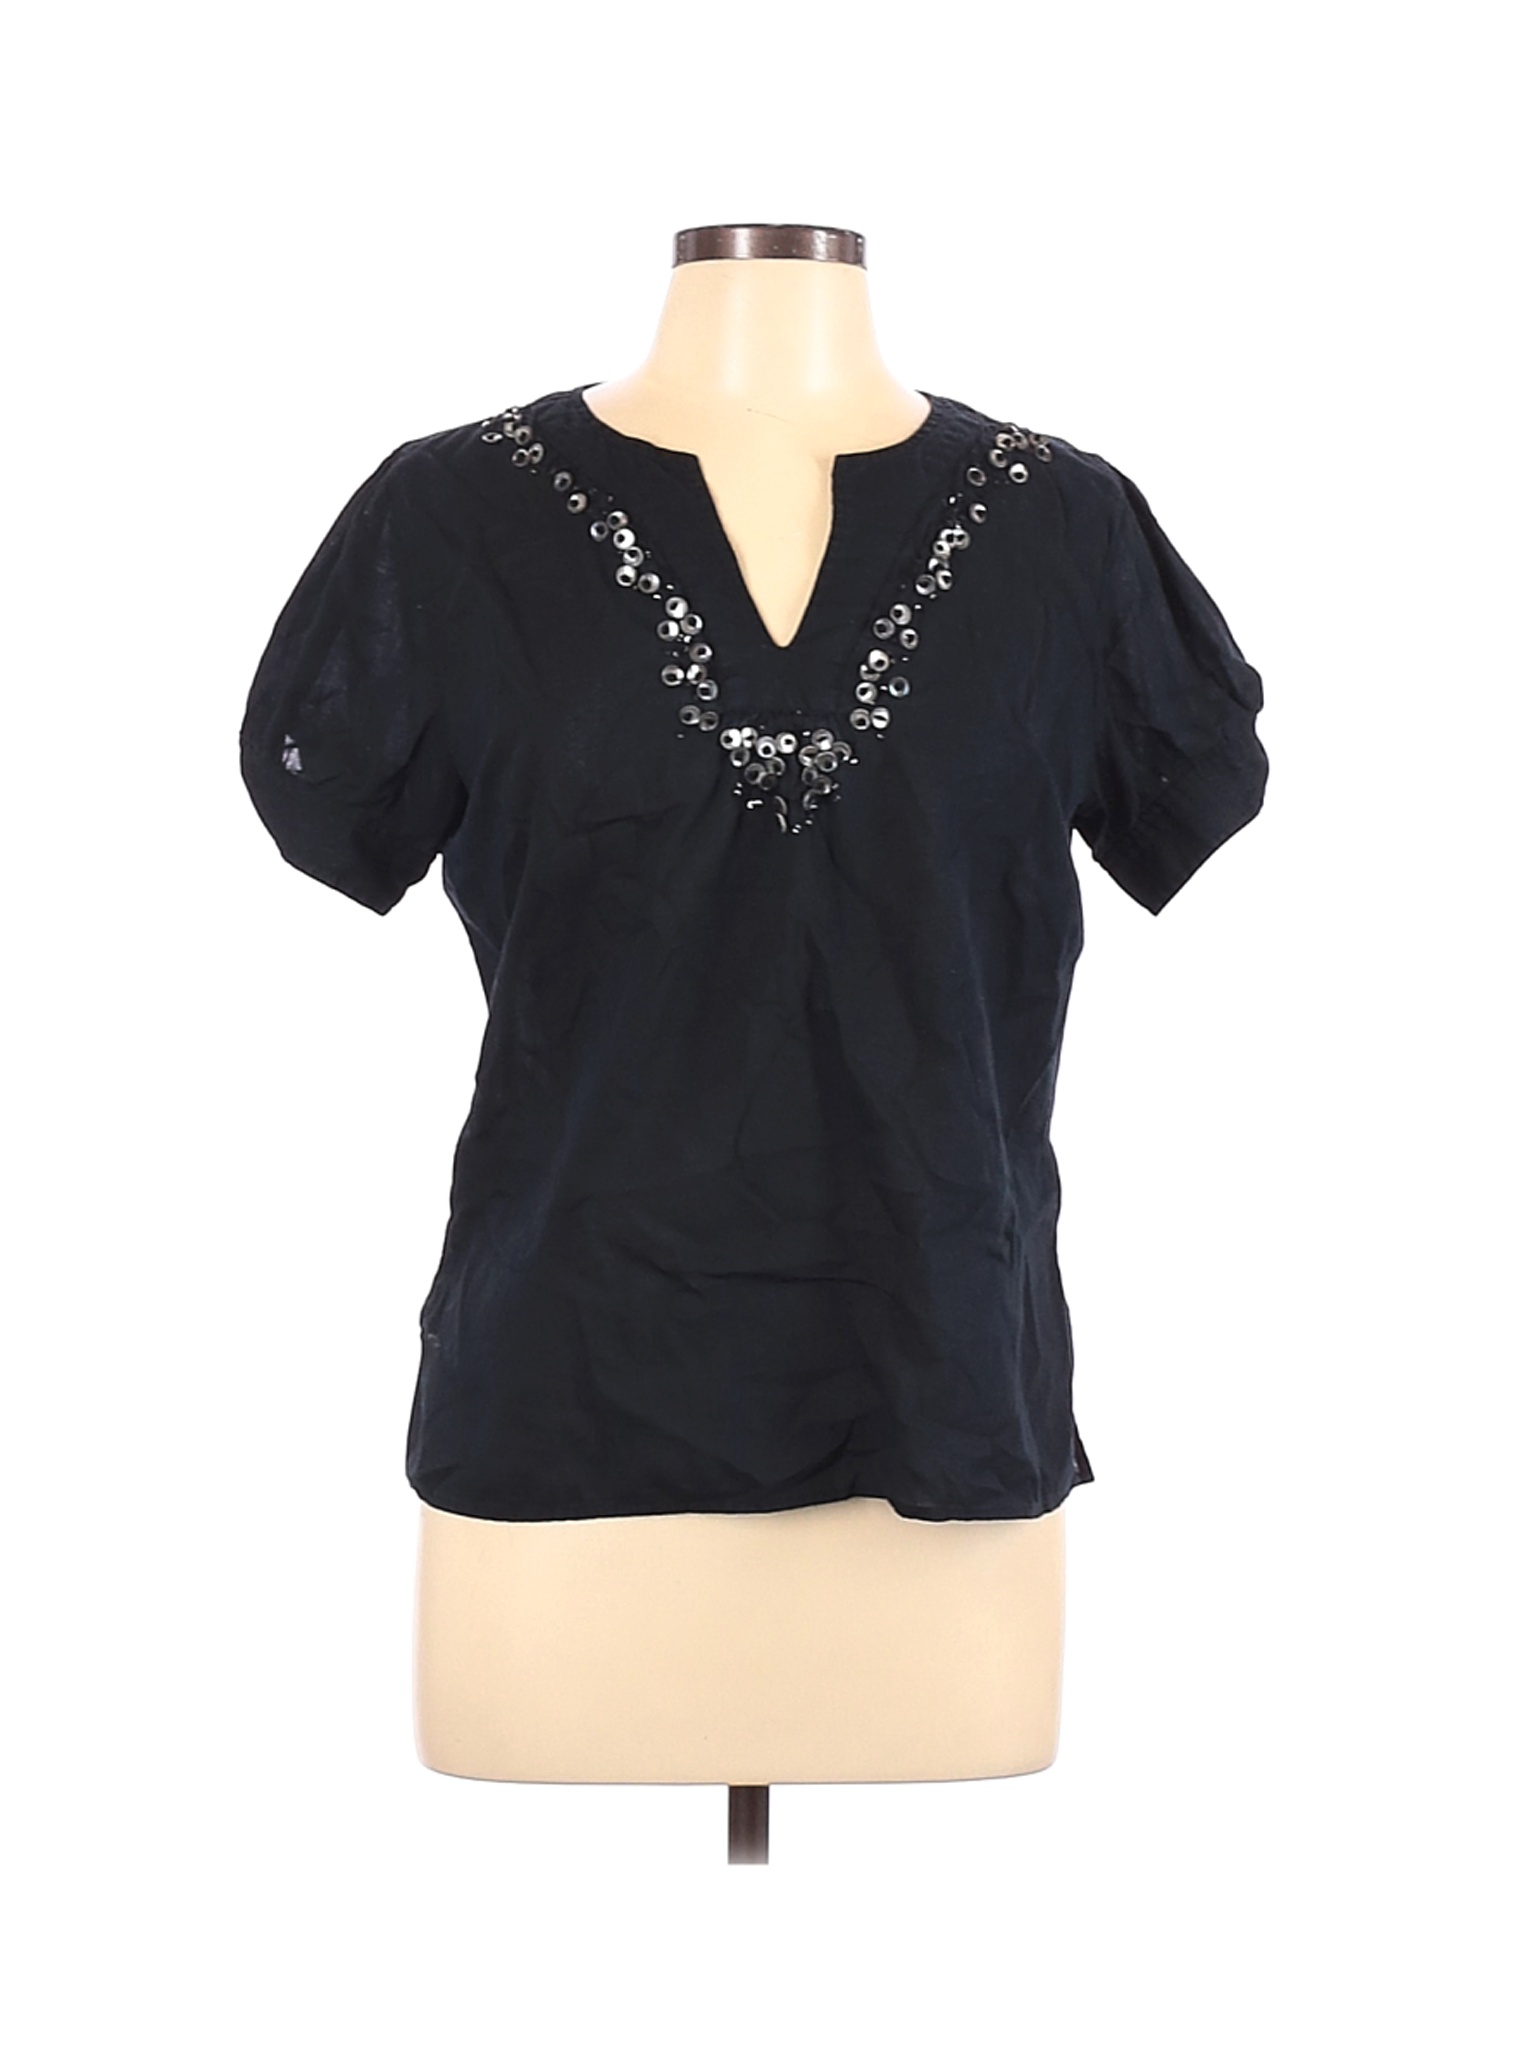 Gap Women Black Short Sleeve Blouse L | eBay